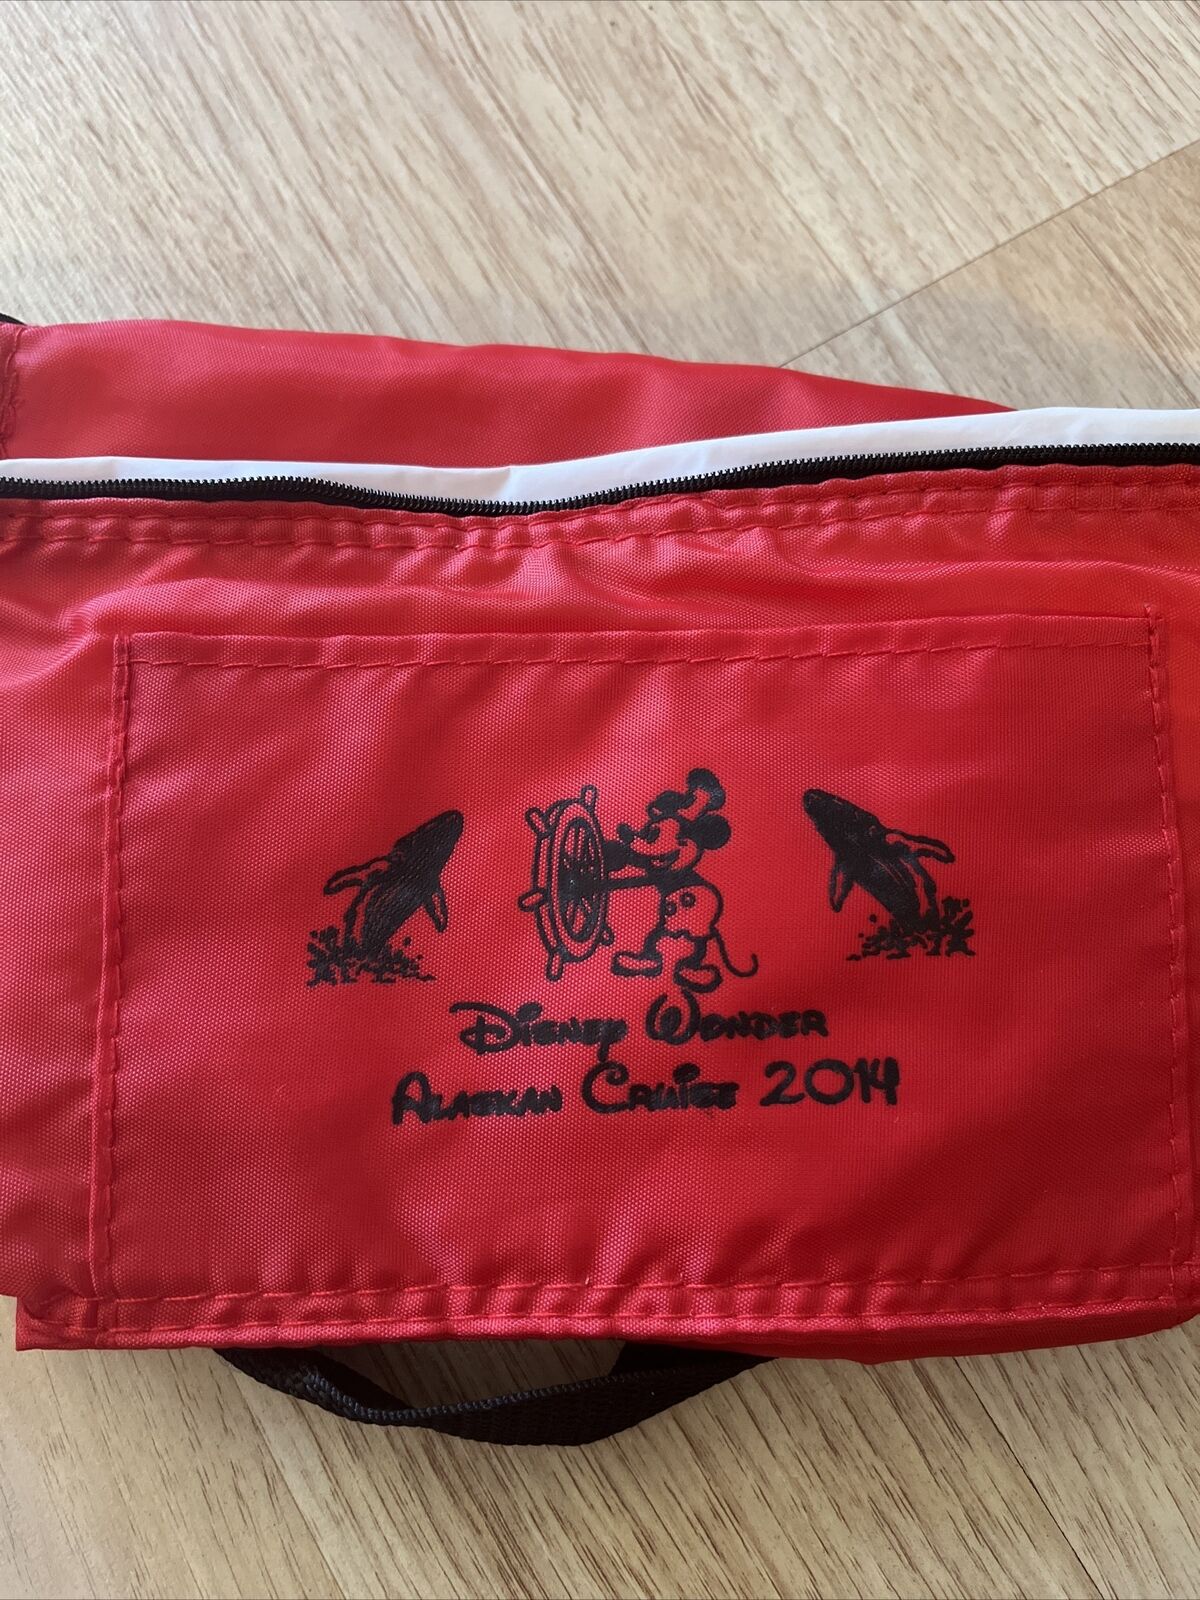 Disney Wonder Alaskan Cruise 2014 Insulated Drink Bag- Cooler NWOT Red